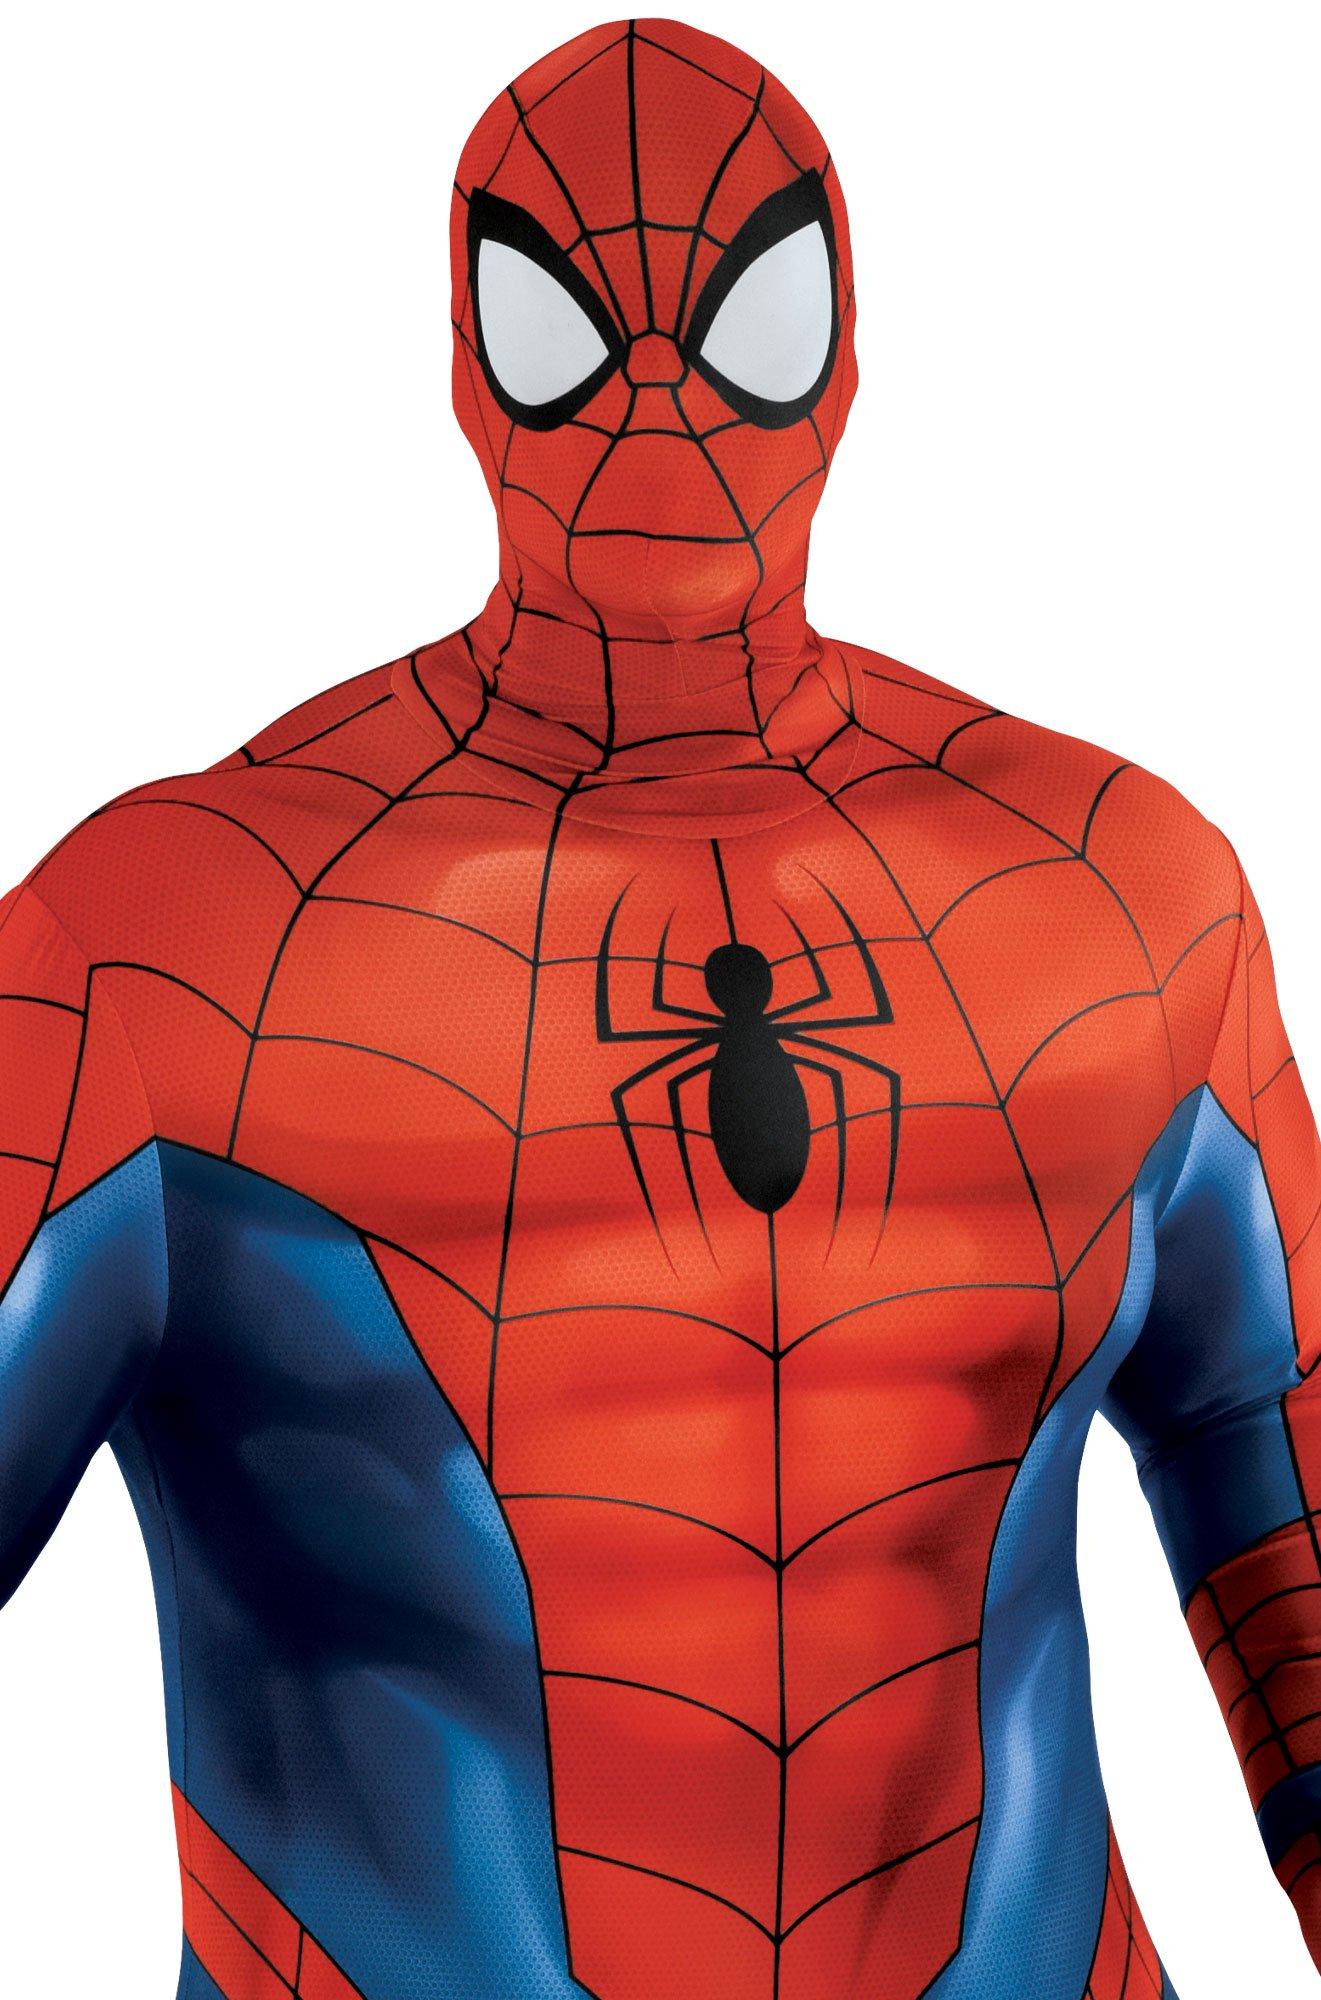 Spider-Man Plus Size Party Suit™ Costume - Marvel